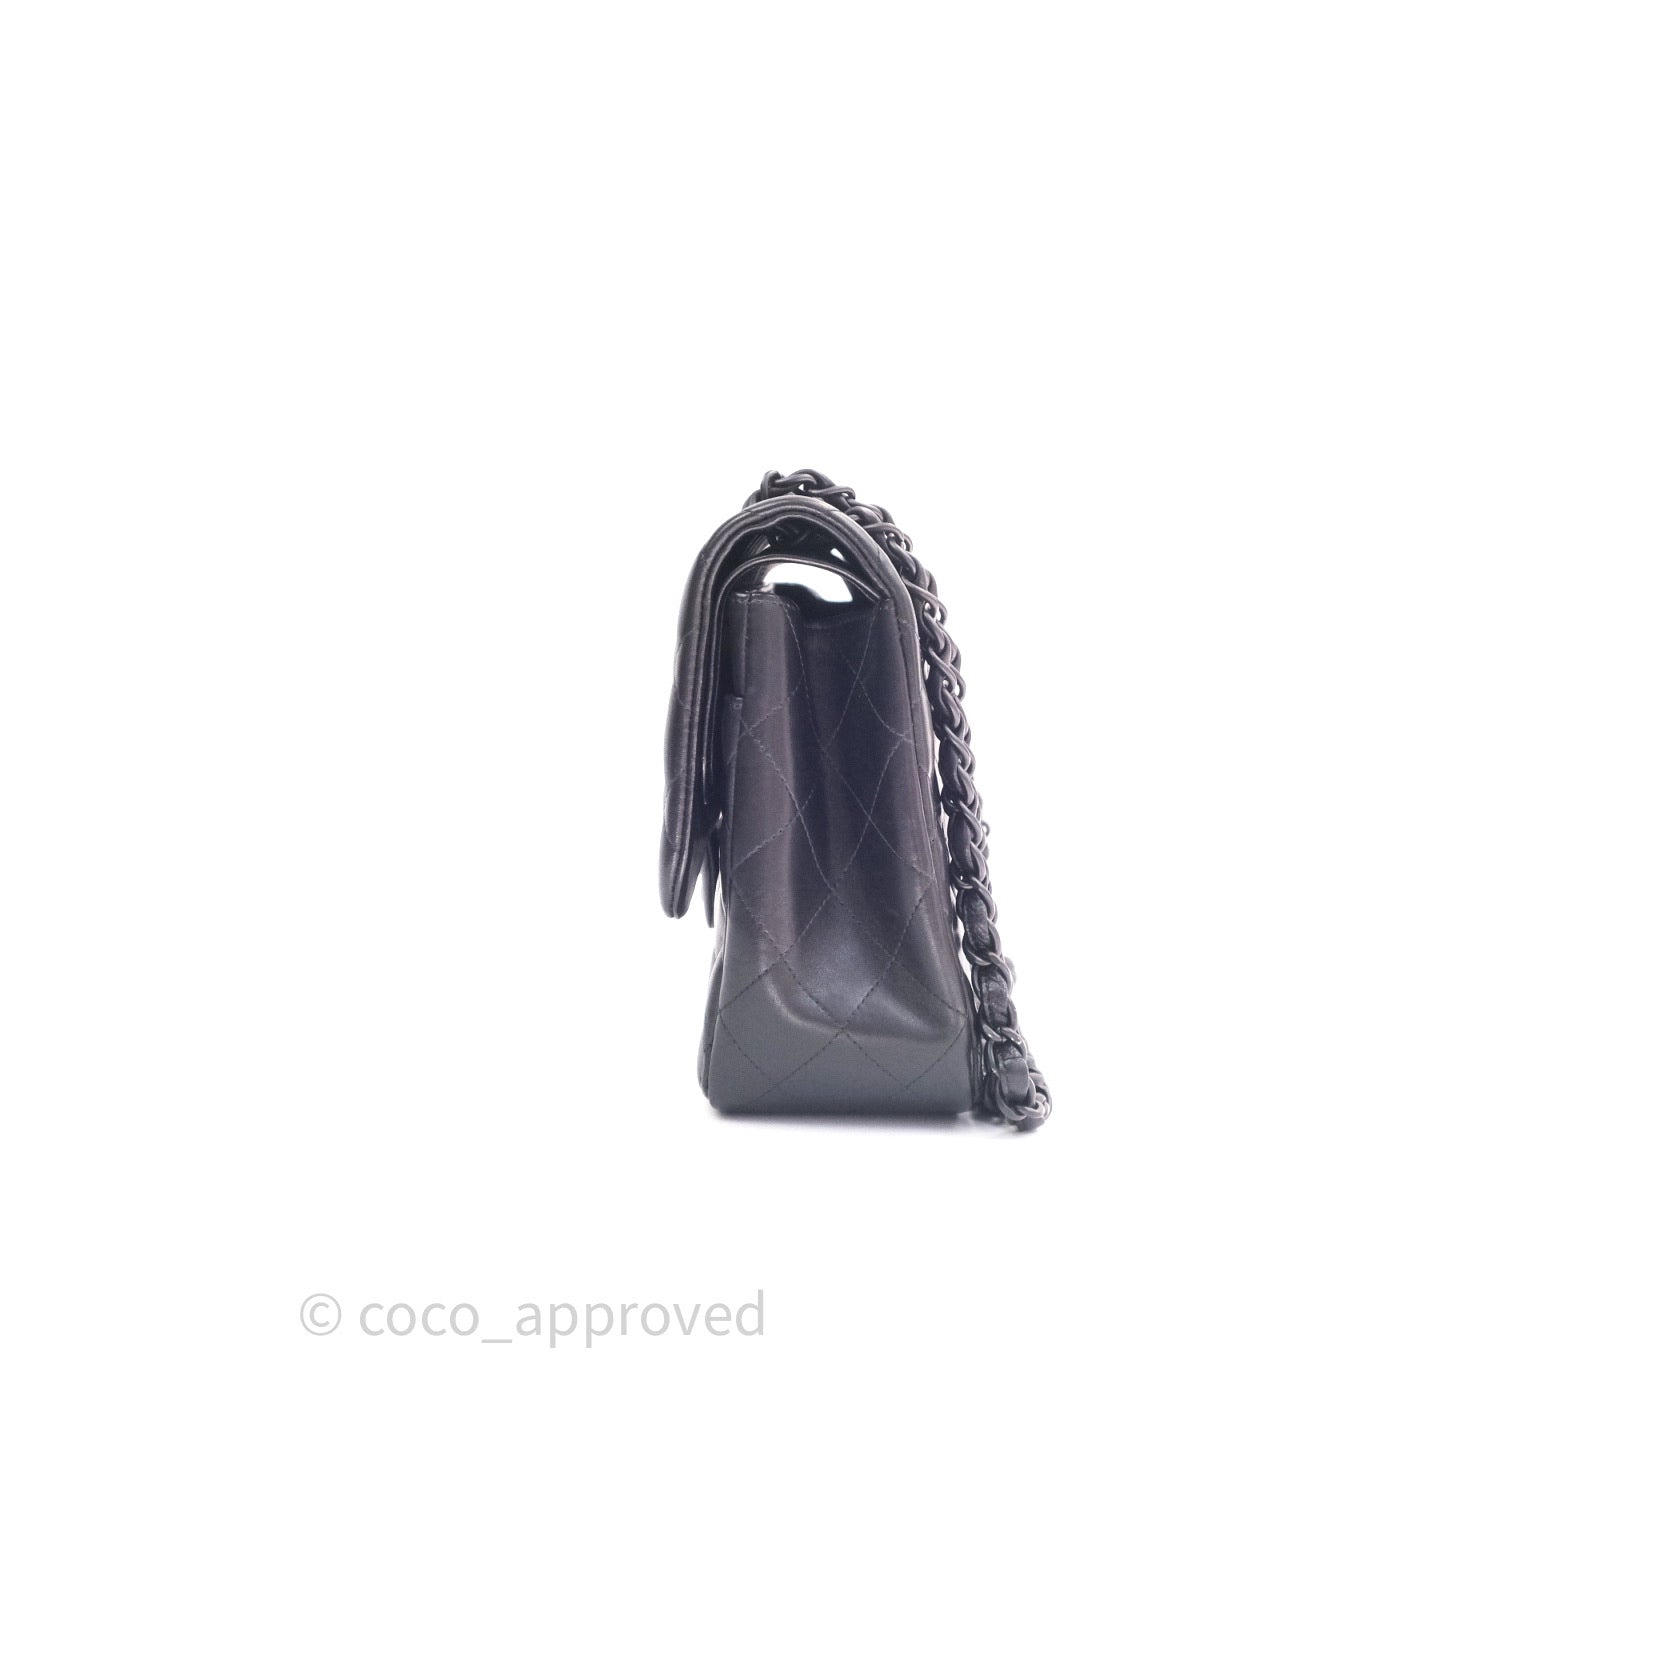 Chanel Jumbo flap measuring 11.9"x8.5"x3" Black